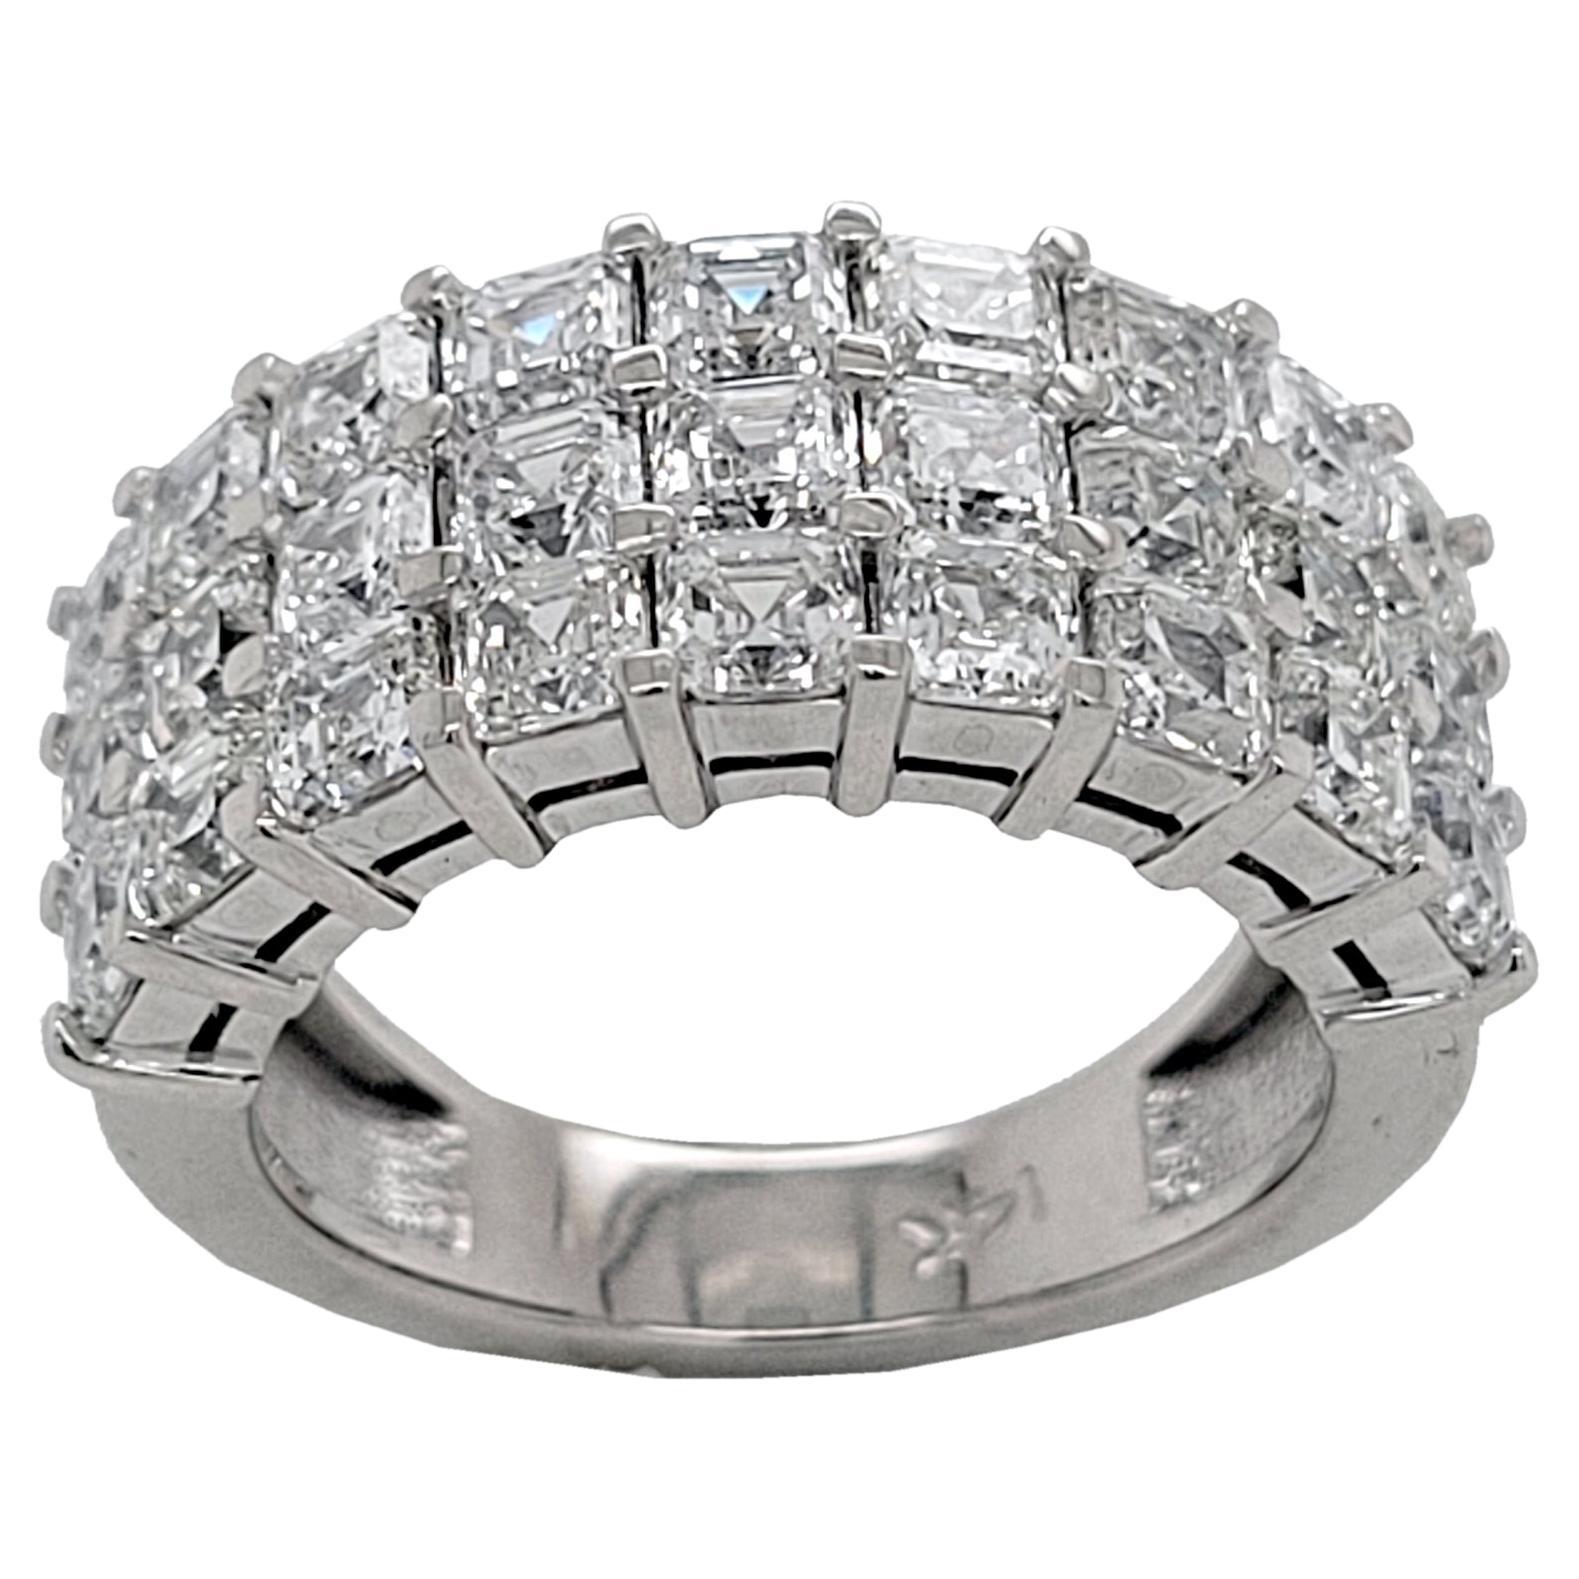 4.20 Ct 3 Row Asscher Cut 'Square Emerald Cut' Diamond Anniversary Ring